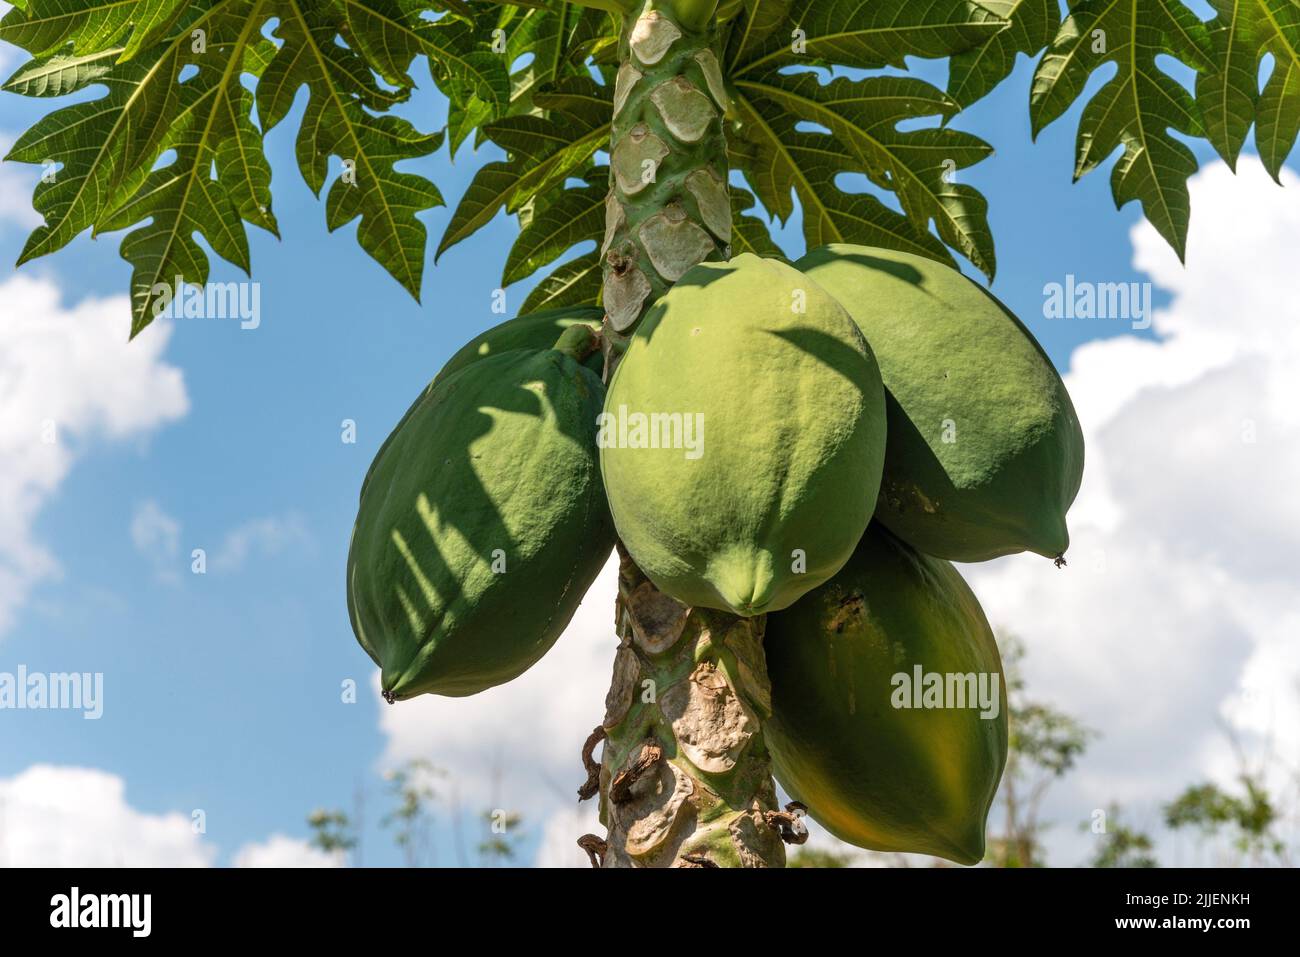 papaya, papaw, paw paw, mamao, tree melon (Carica papaya), fruits on a tree, Thailand Stock Photo